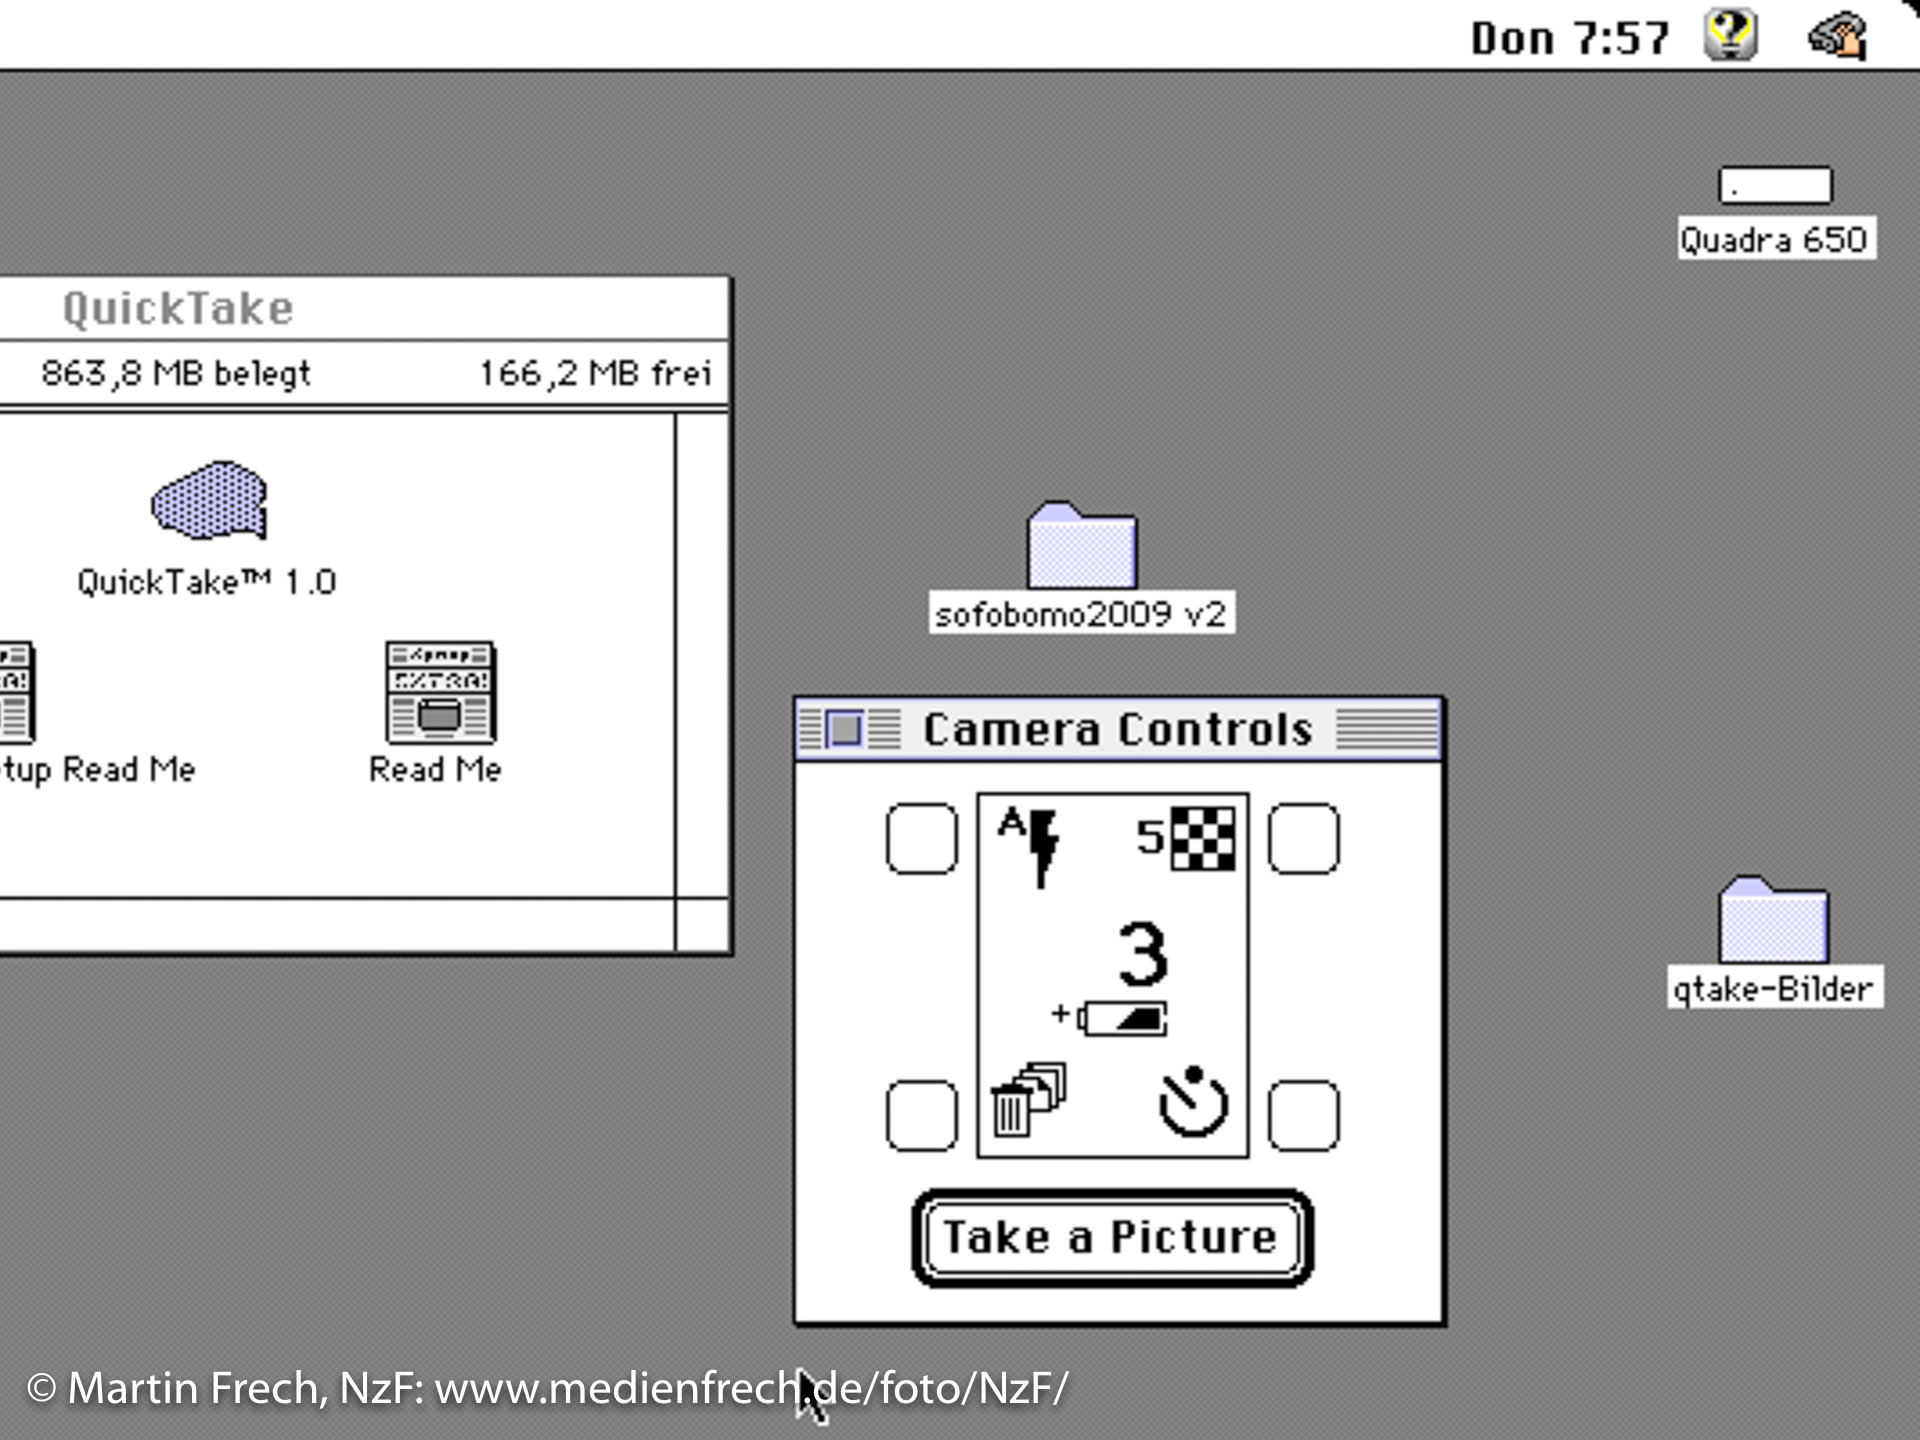 © Martin Frech: Die QuickTake 100 kann komplett per Software fernbedient werden. (Screenshot)